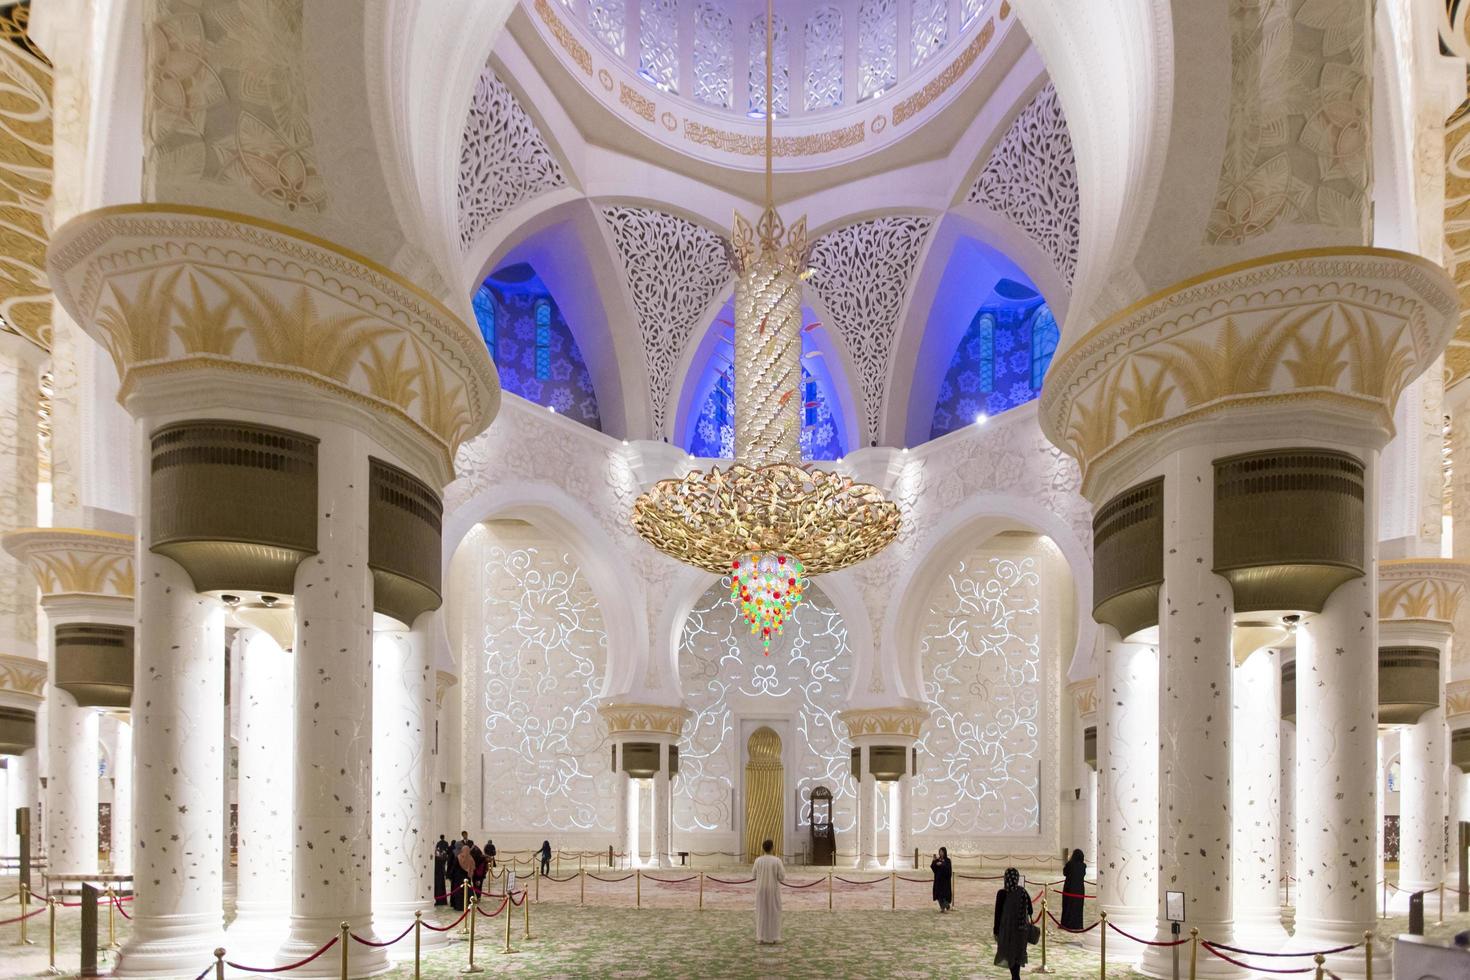 Abu Dhabi, Uae, 4 maj 2015 - inre av Sheikh Zayed -moskén i Abu Dhabi. moskén designades av yusef abdelki och öppnades 2007. foto